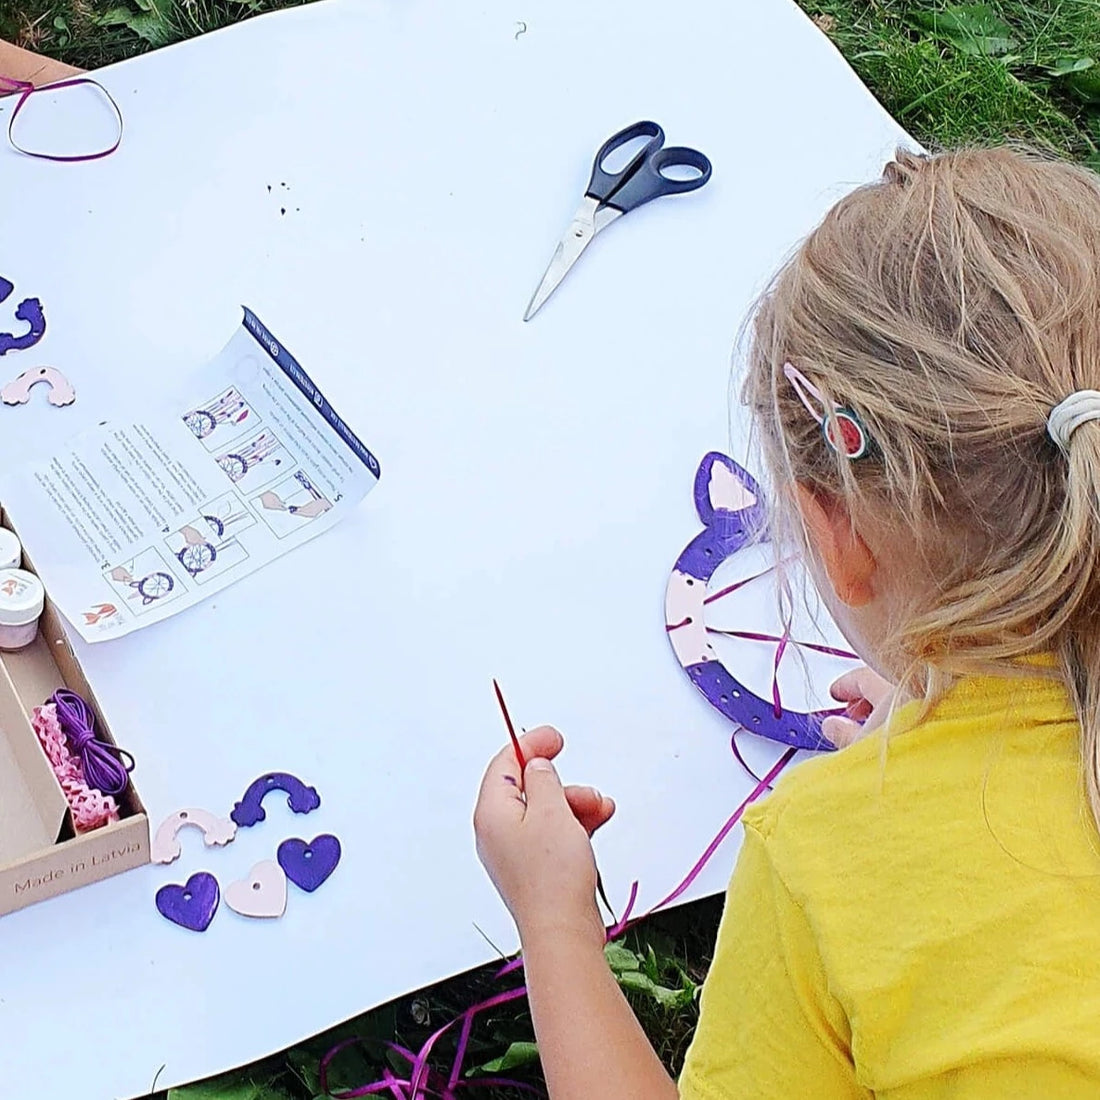 4M Dream Catcher Making Kit  Fun Crafts Work for 5 Year Old Kids in U –  Toyzees